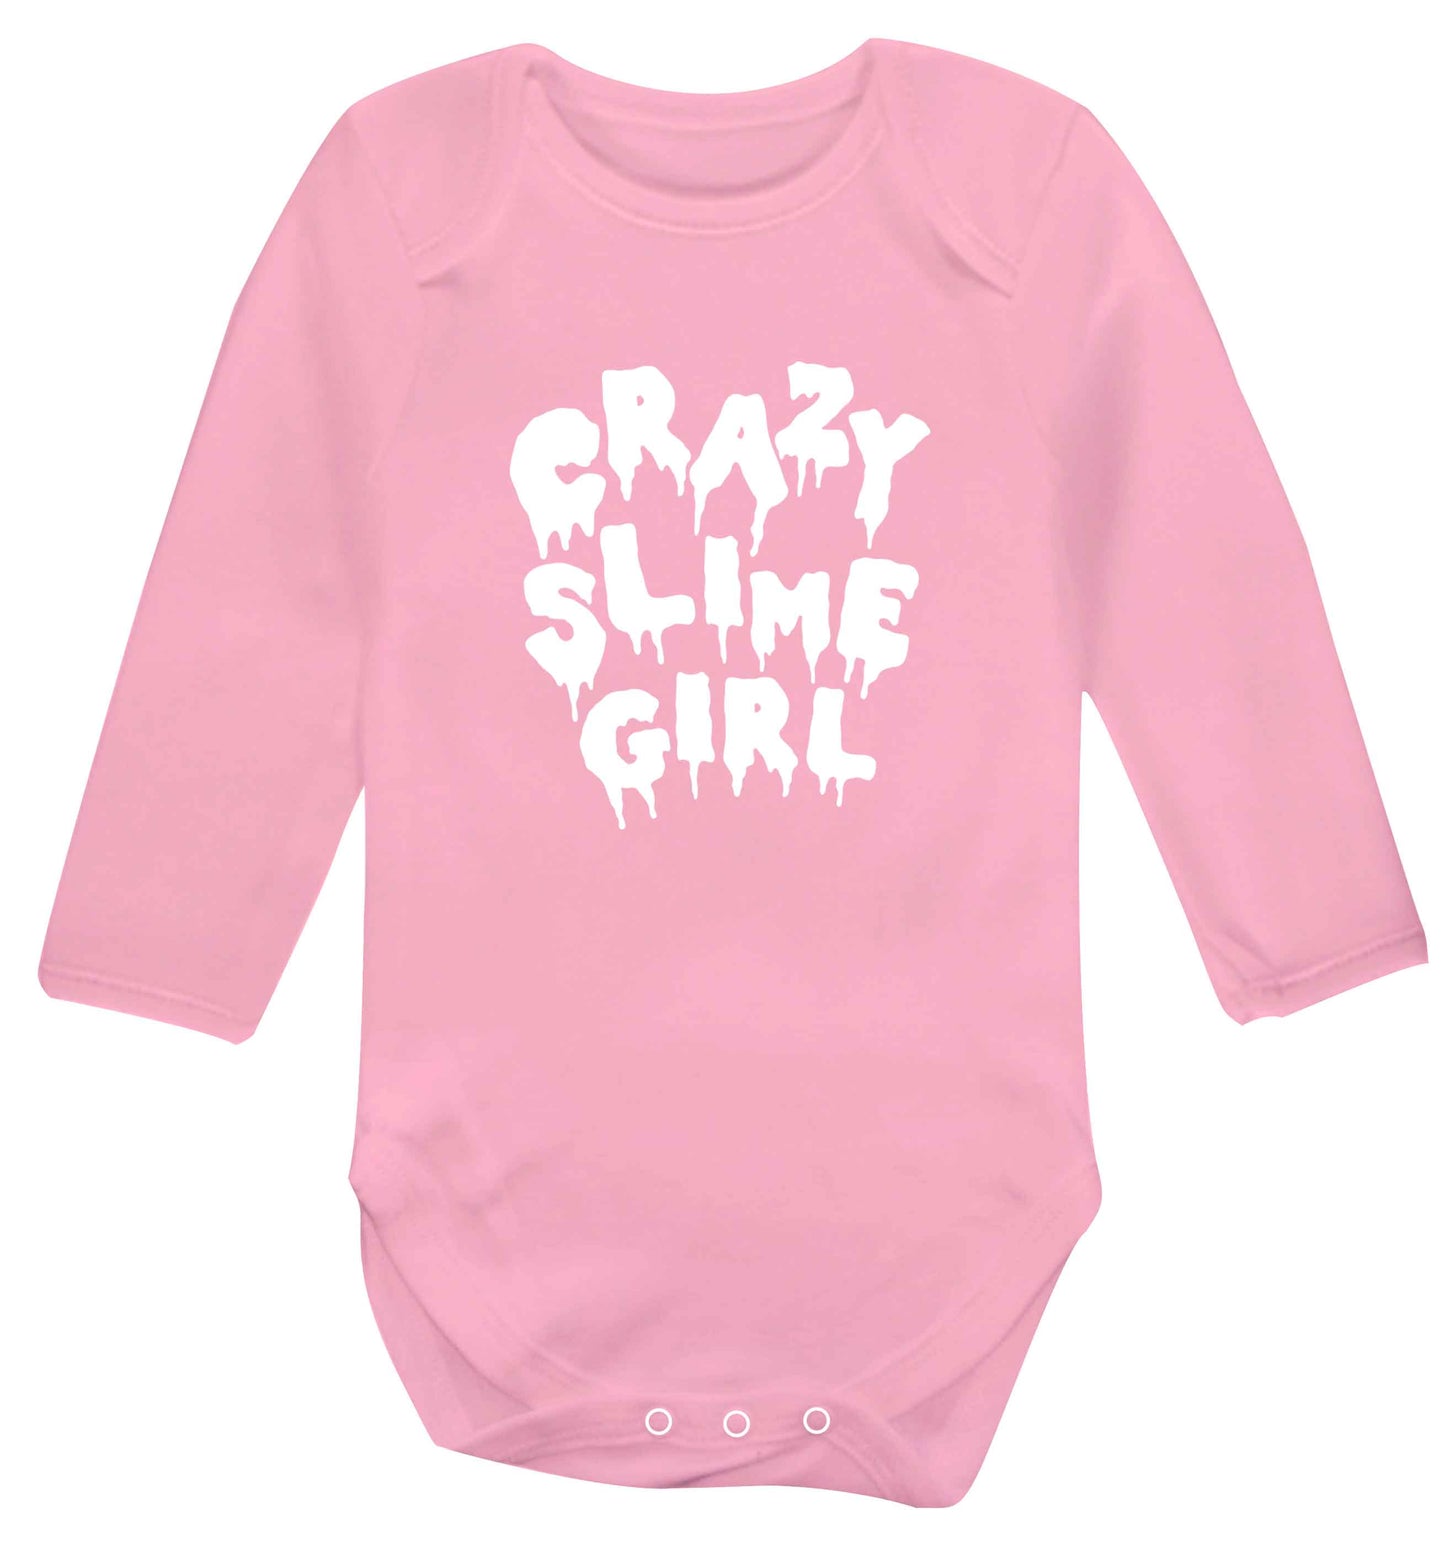 Crazy slime girl baby vest long sleeved pale pink 6-12 months